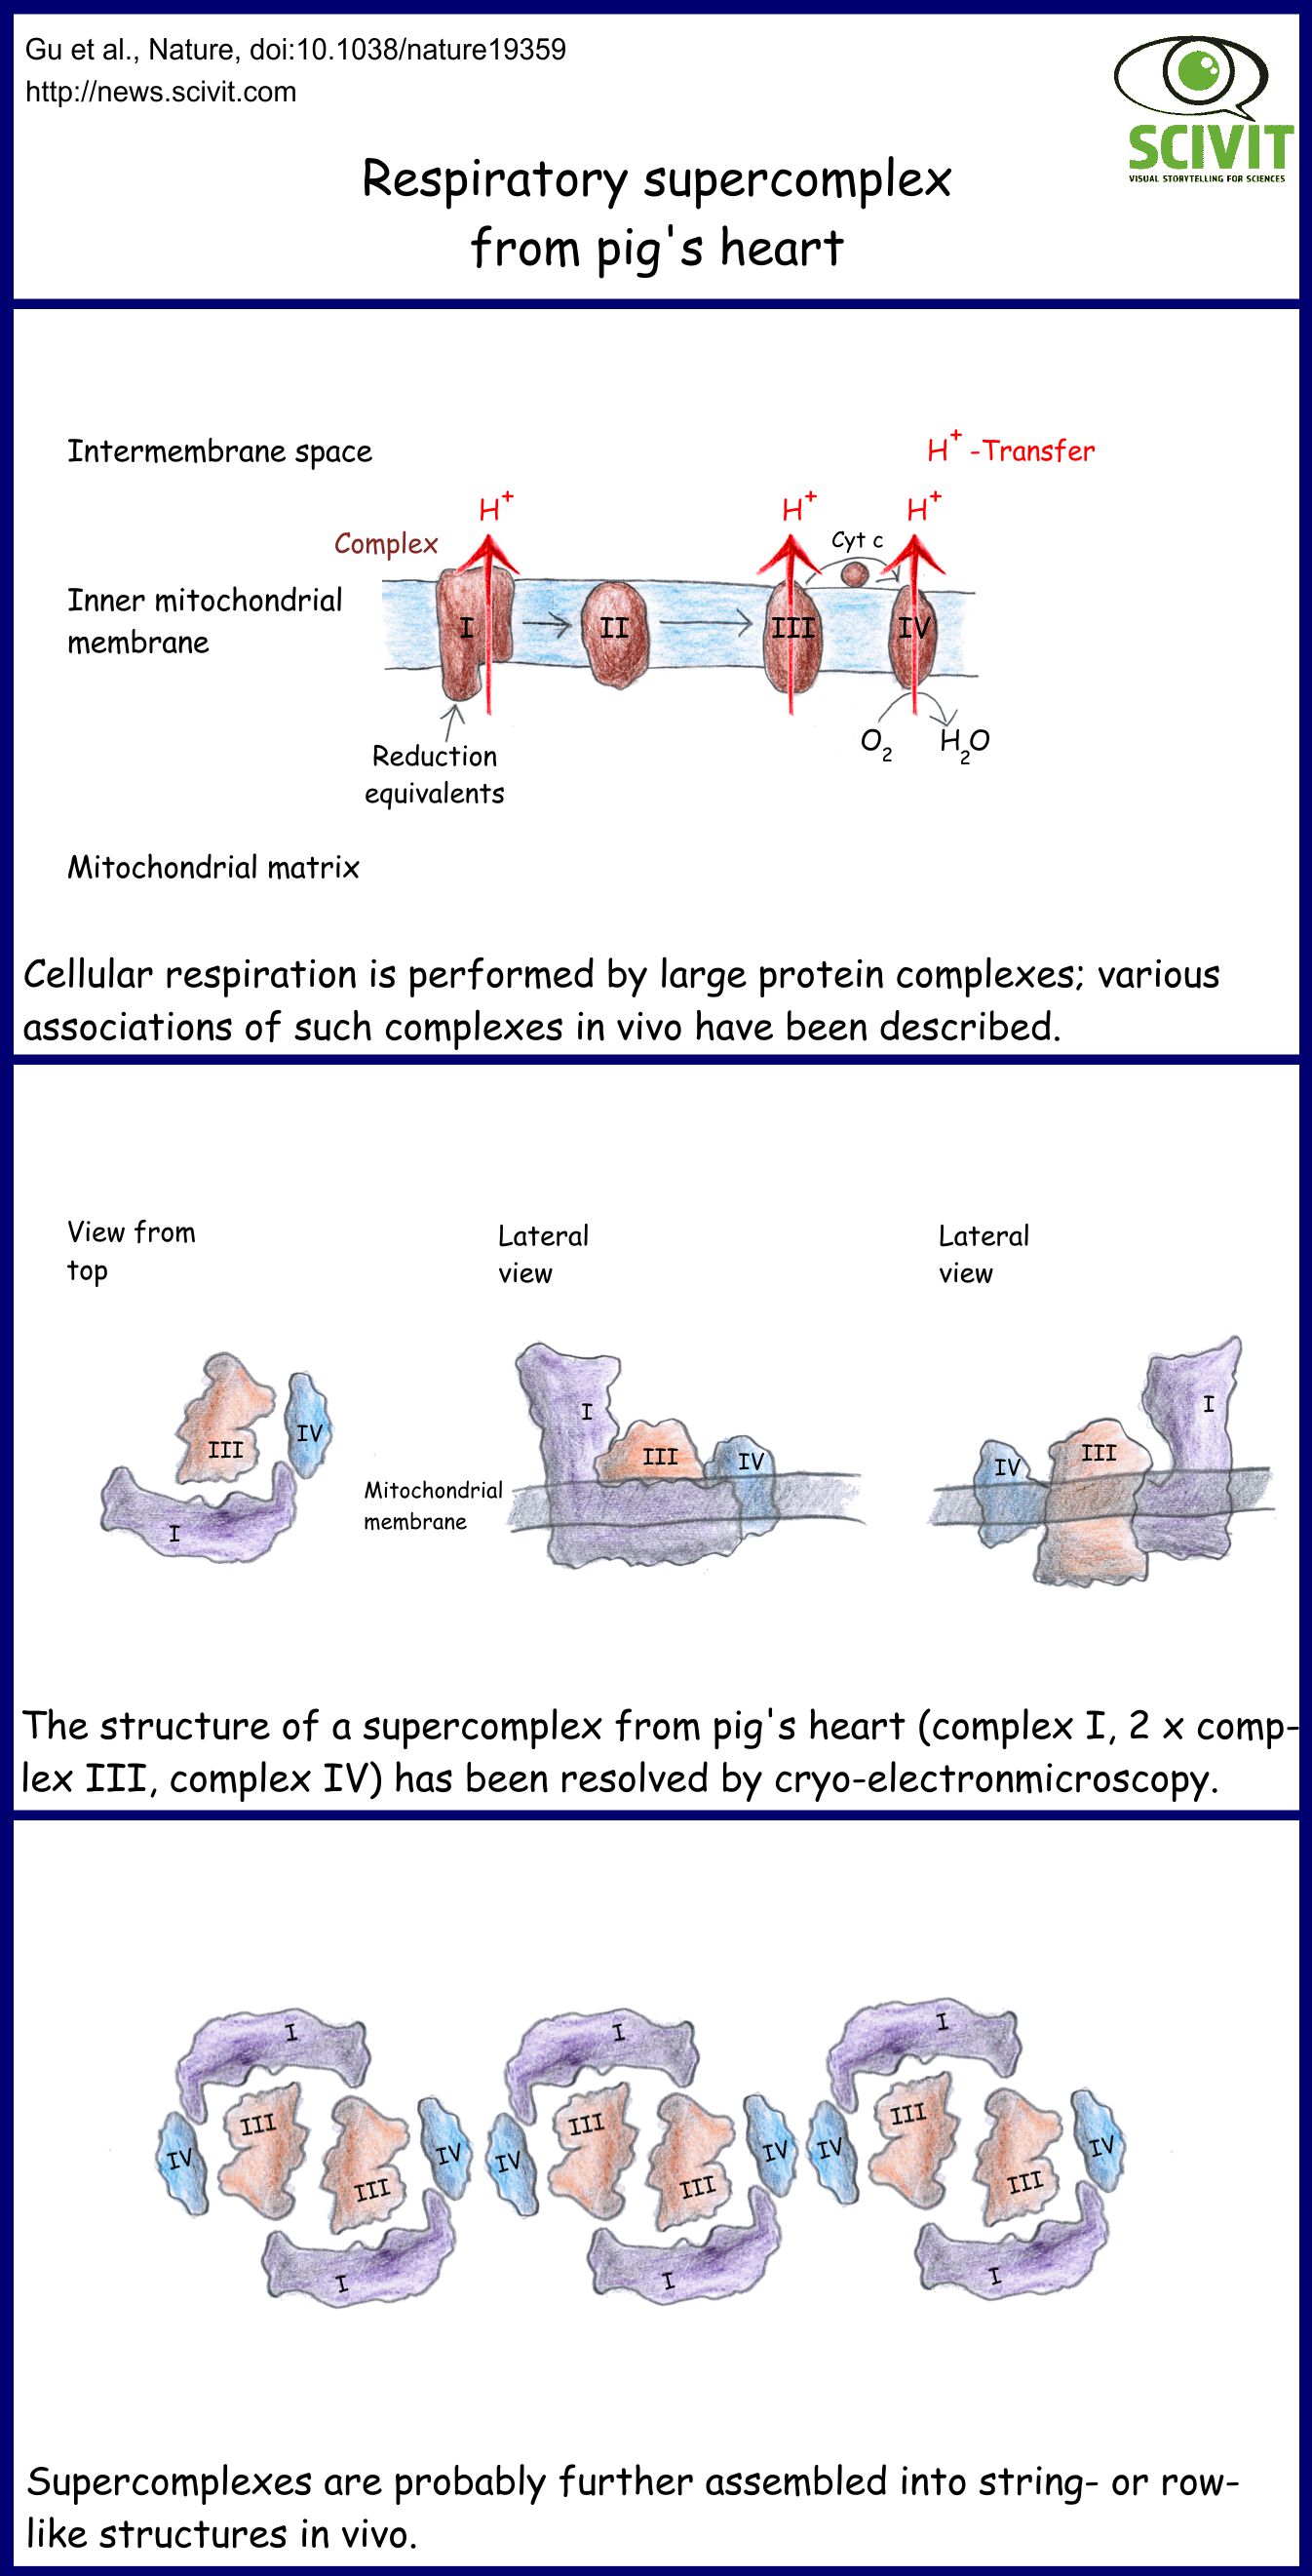 Respiratory supercomplex from pig's heart